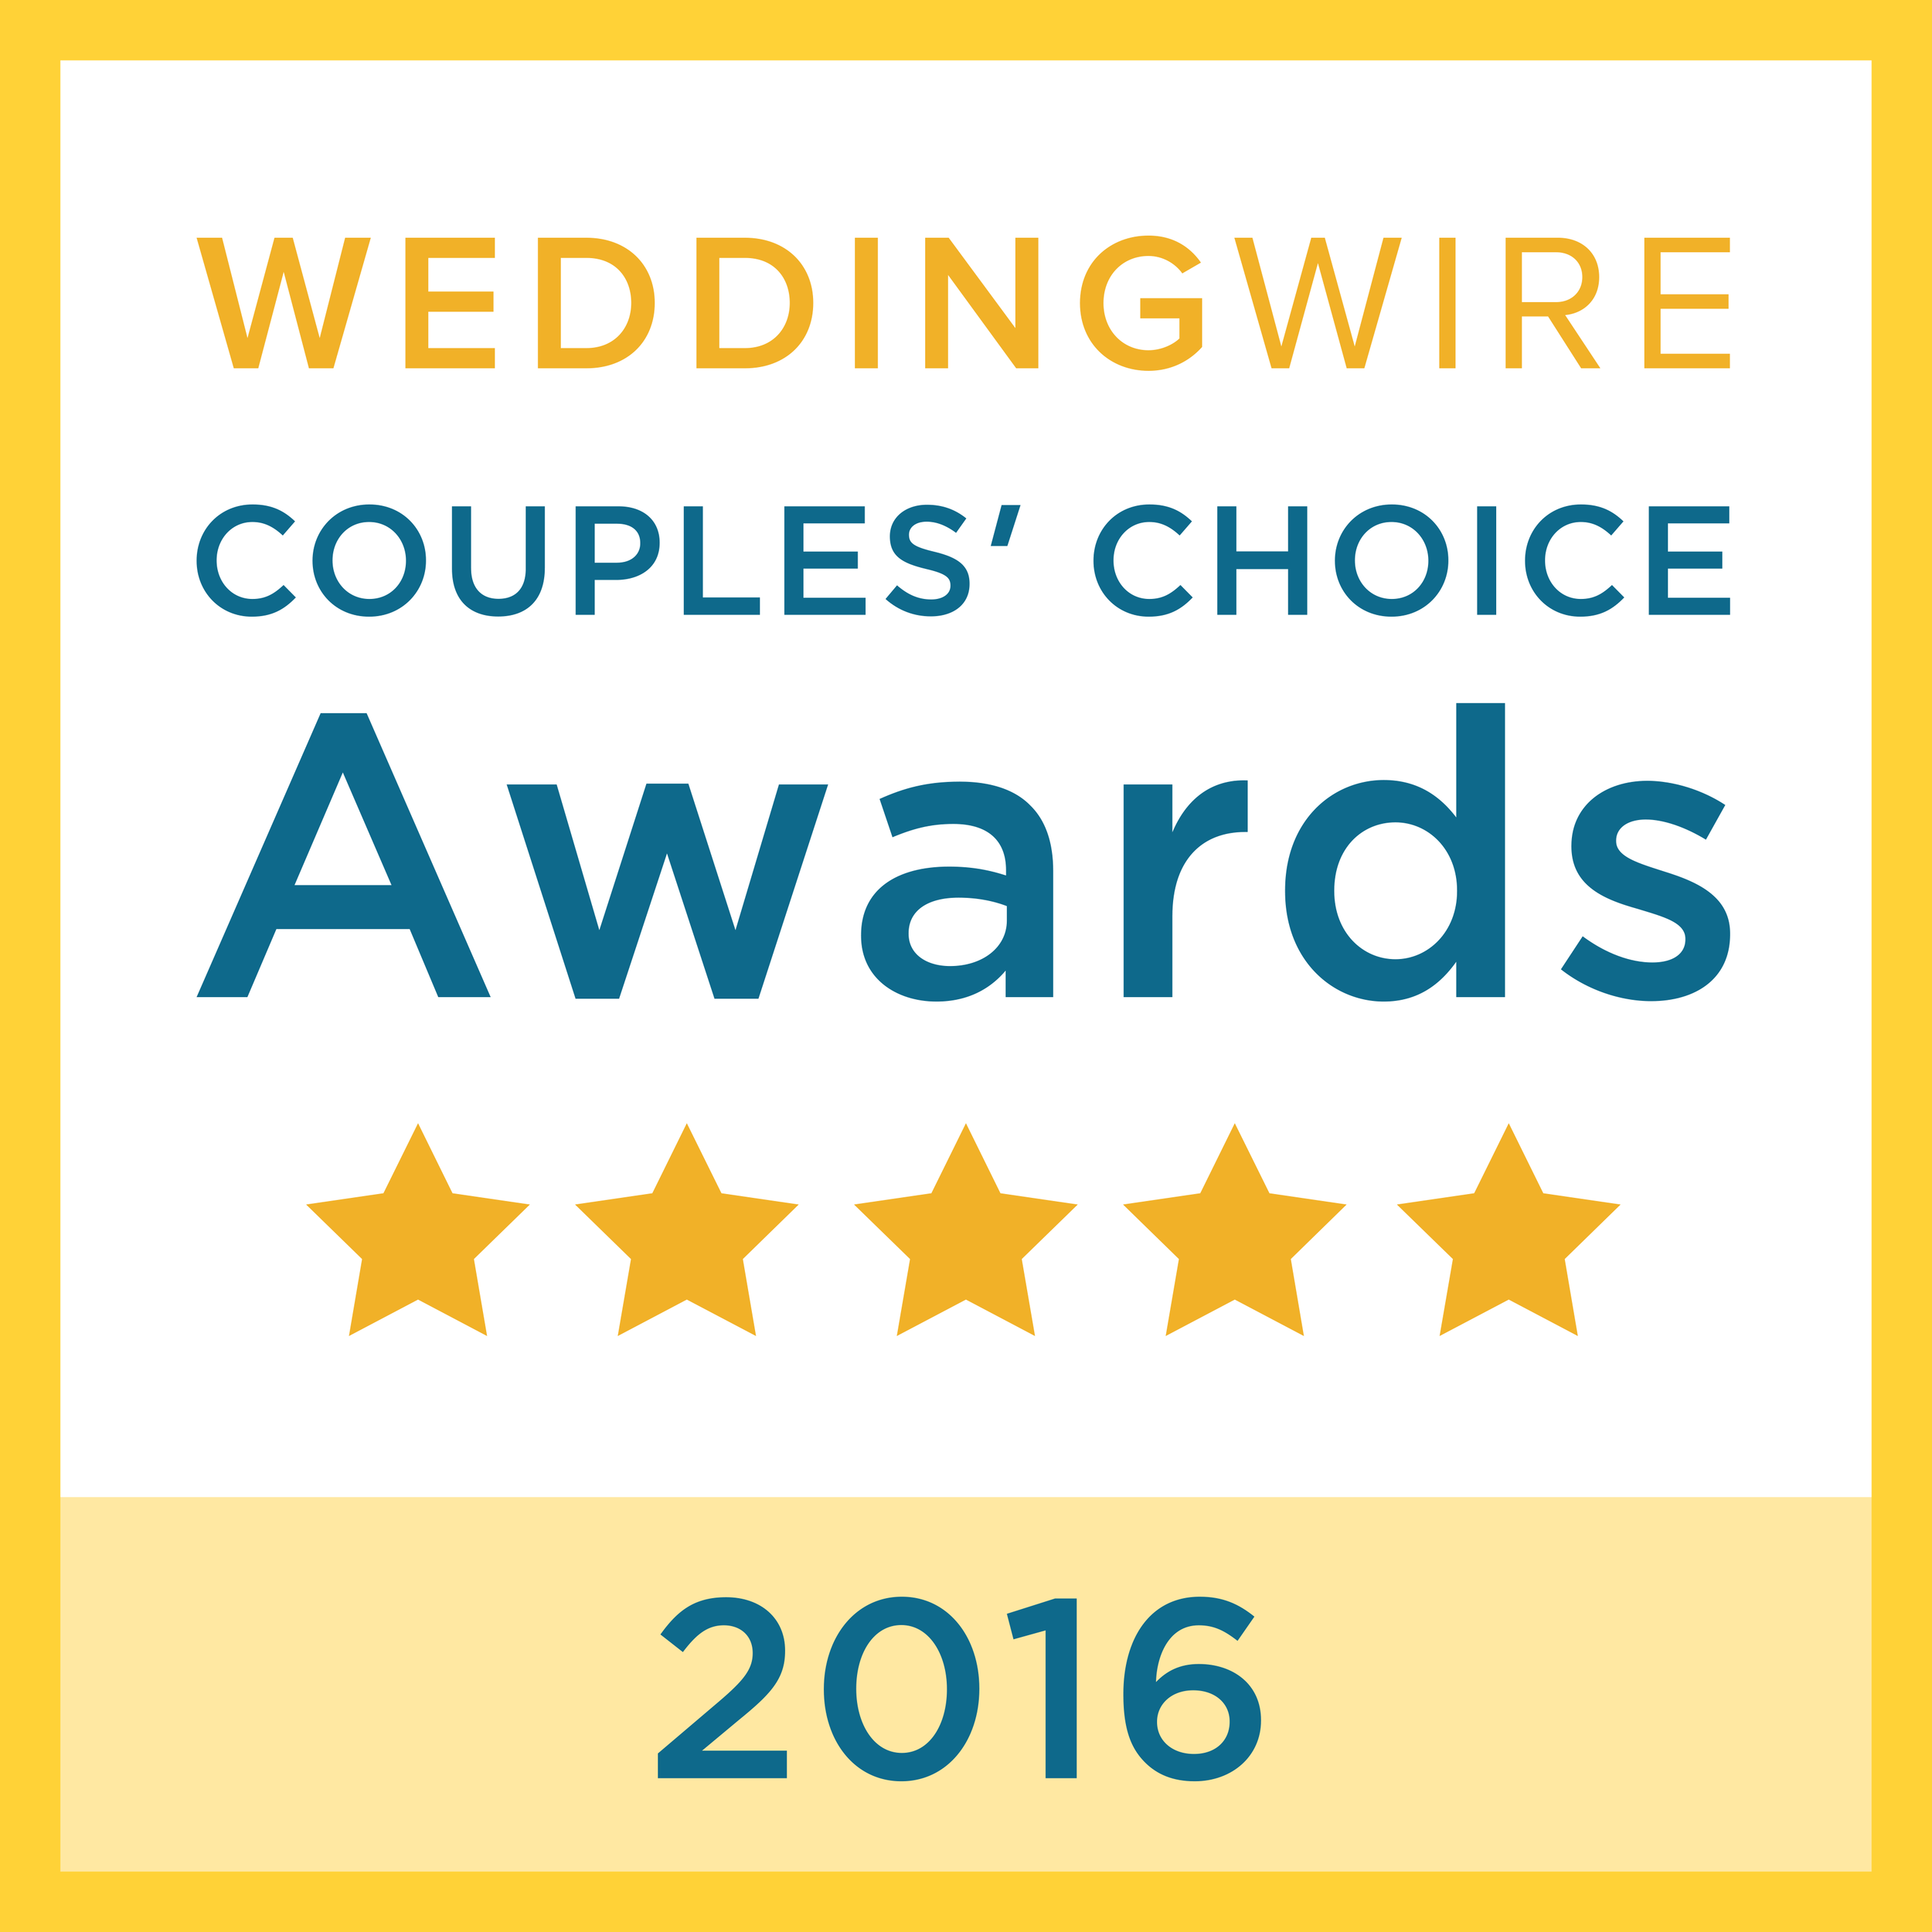 WeddingWire Couples' Choice Award 2016 Winner